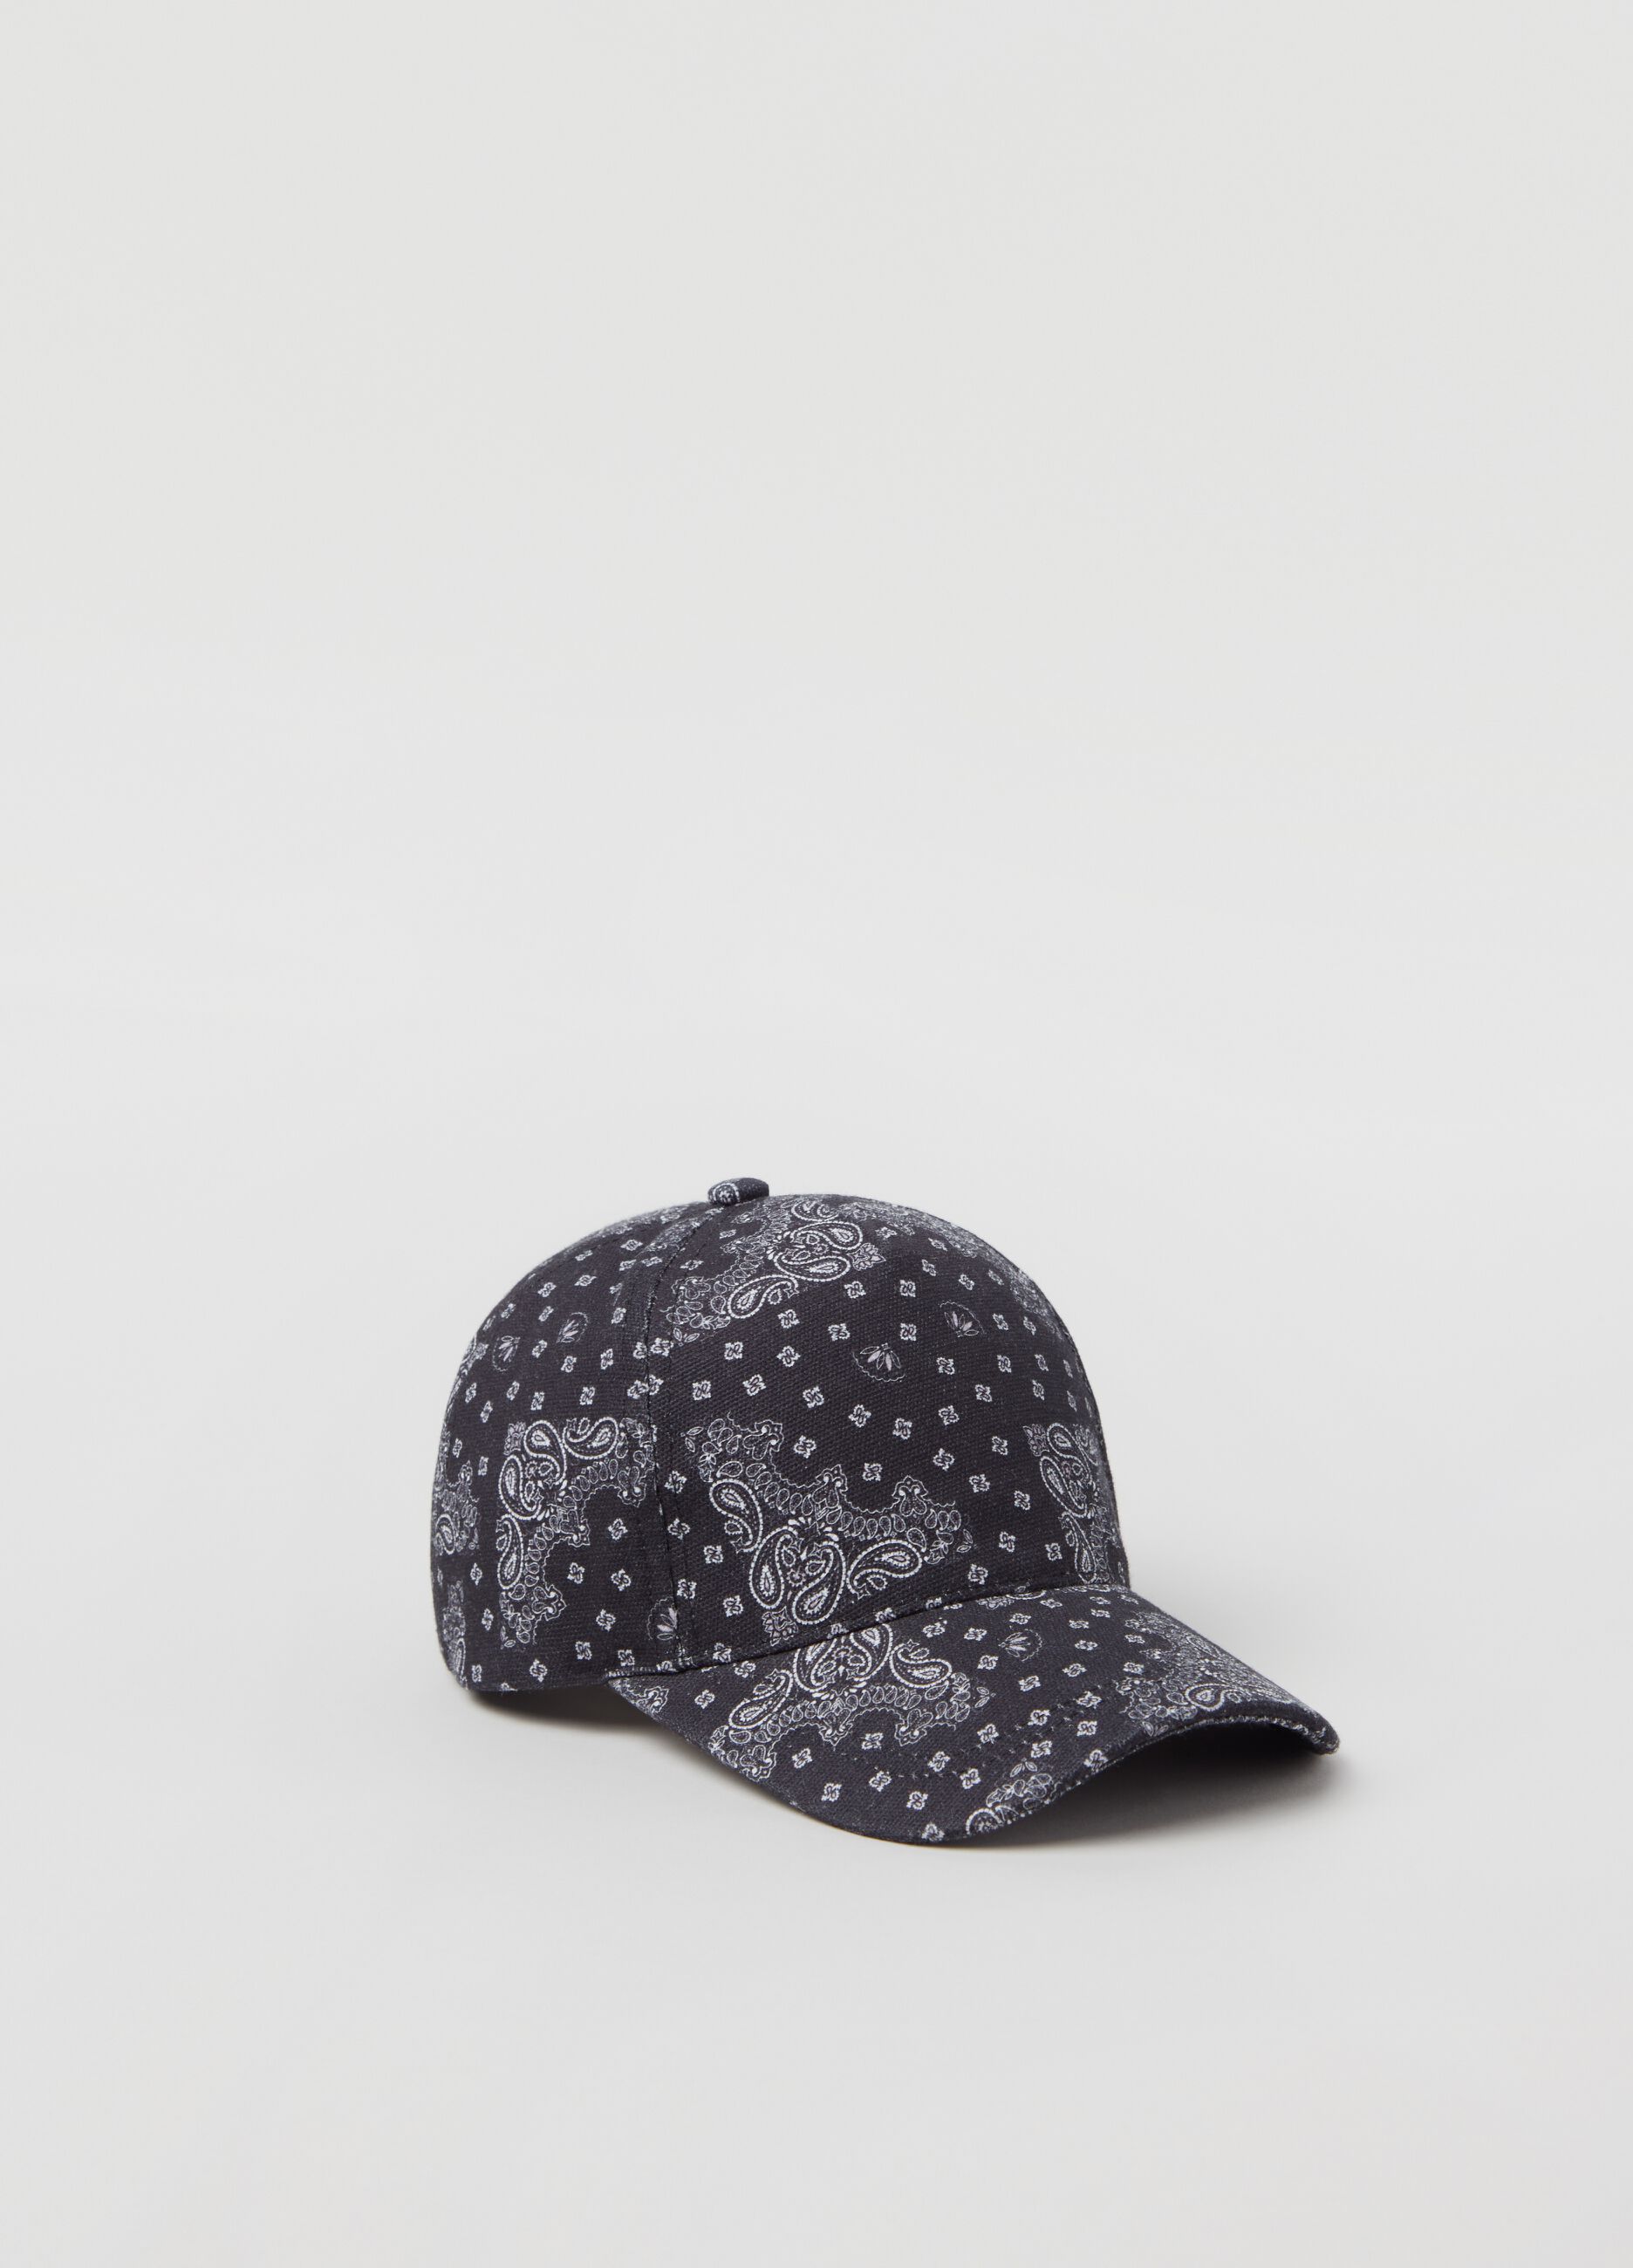 Baseball cap with paisley print